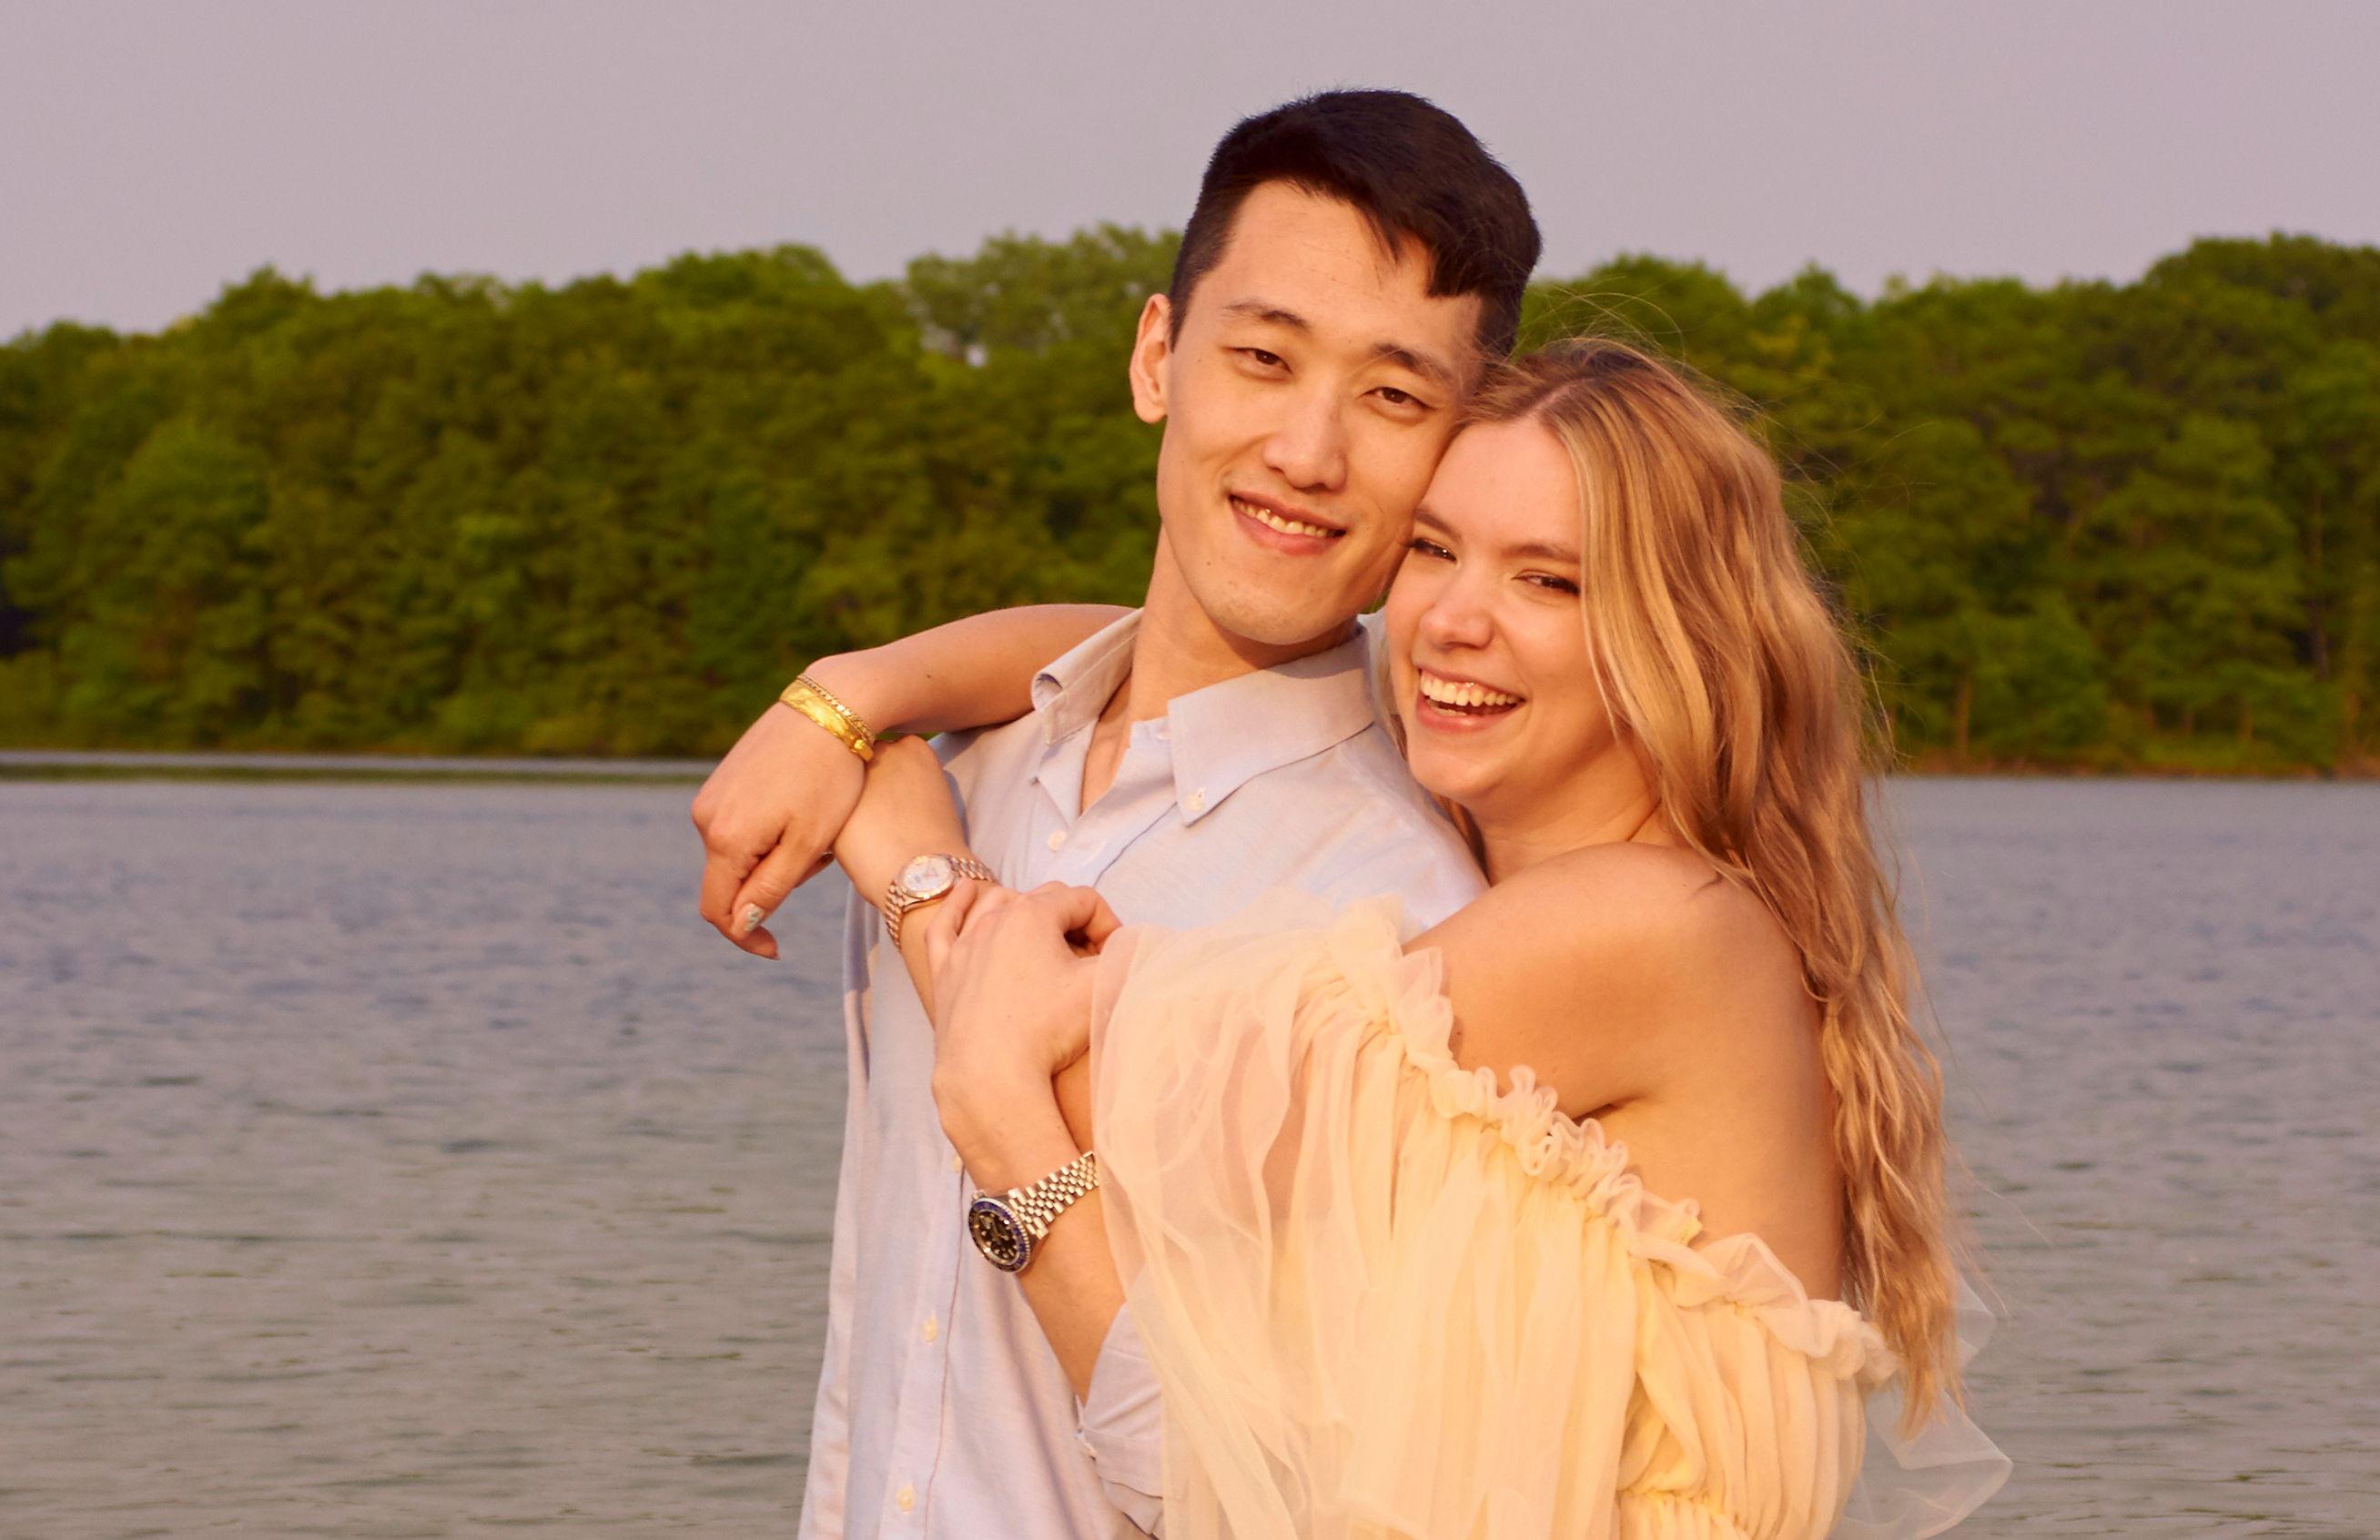 The Wedding Website of Danielle DeJonge and Ryan Li